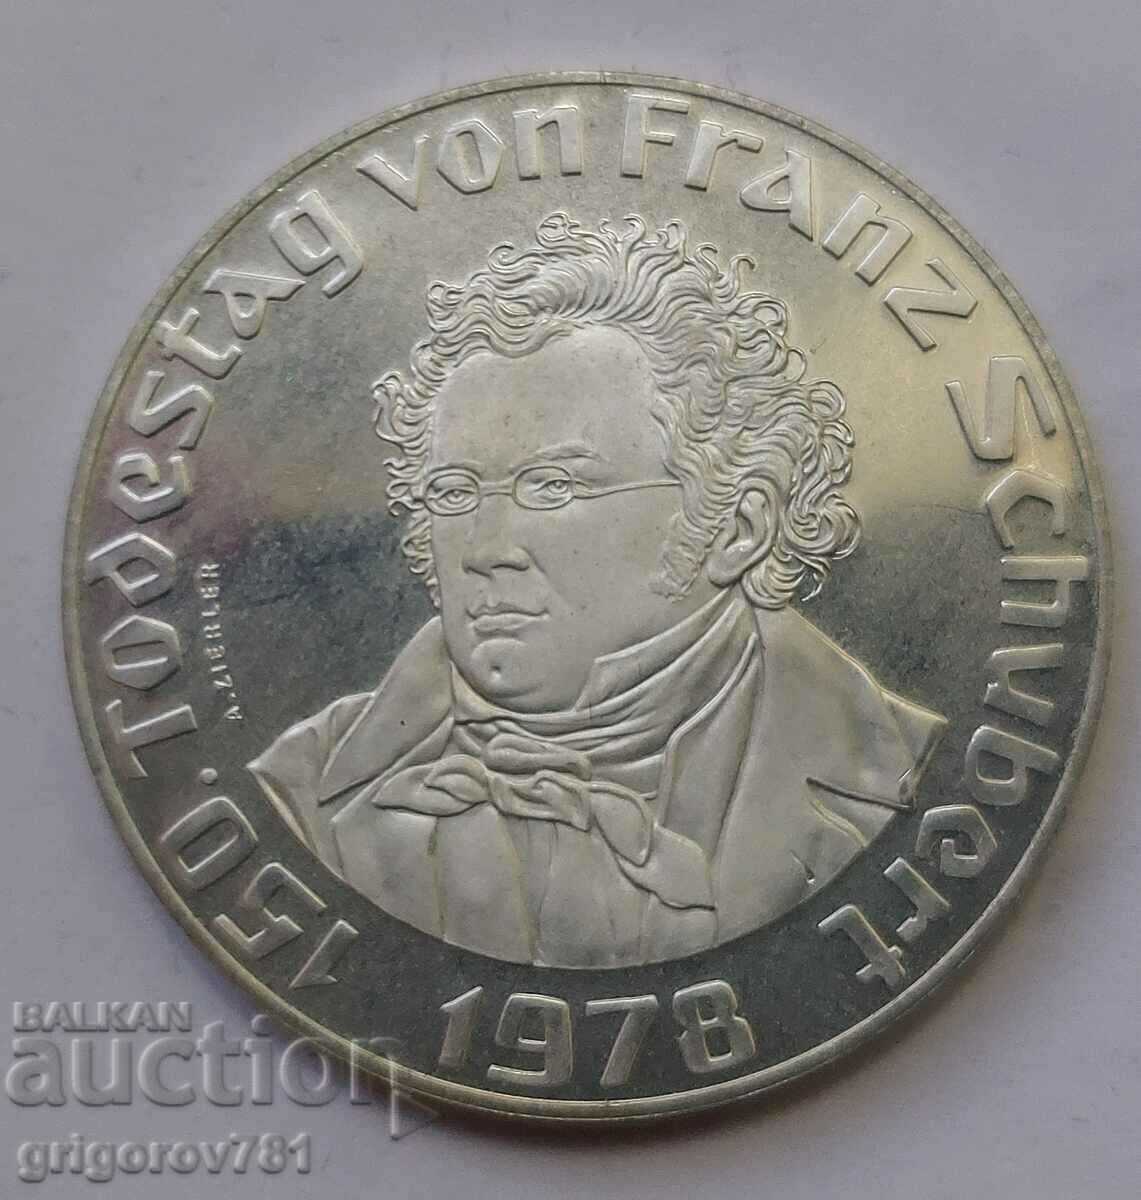 50 Shillings Silver Austria 1978 Proof - Silver Coin #23